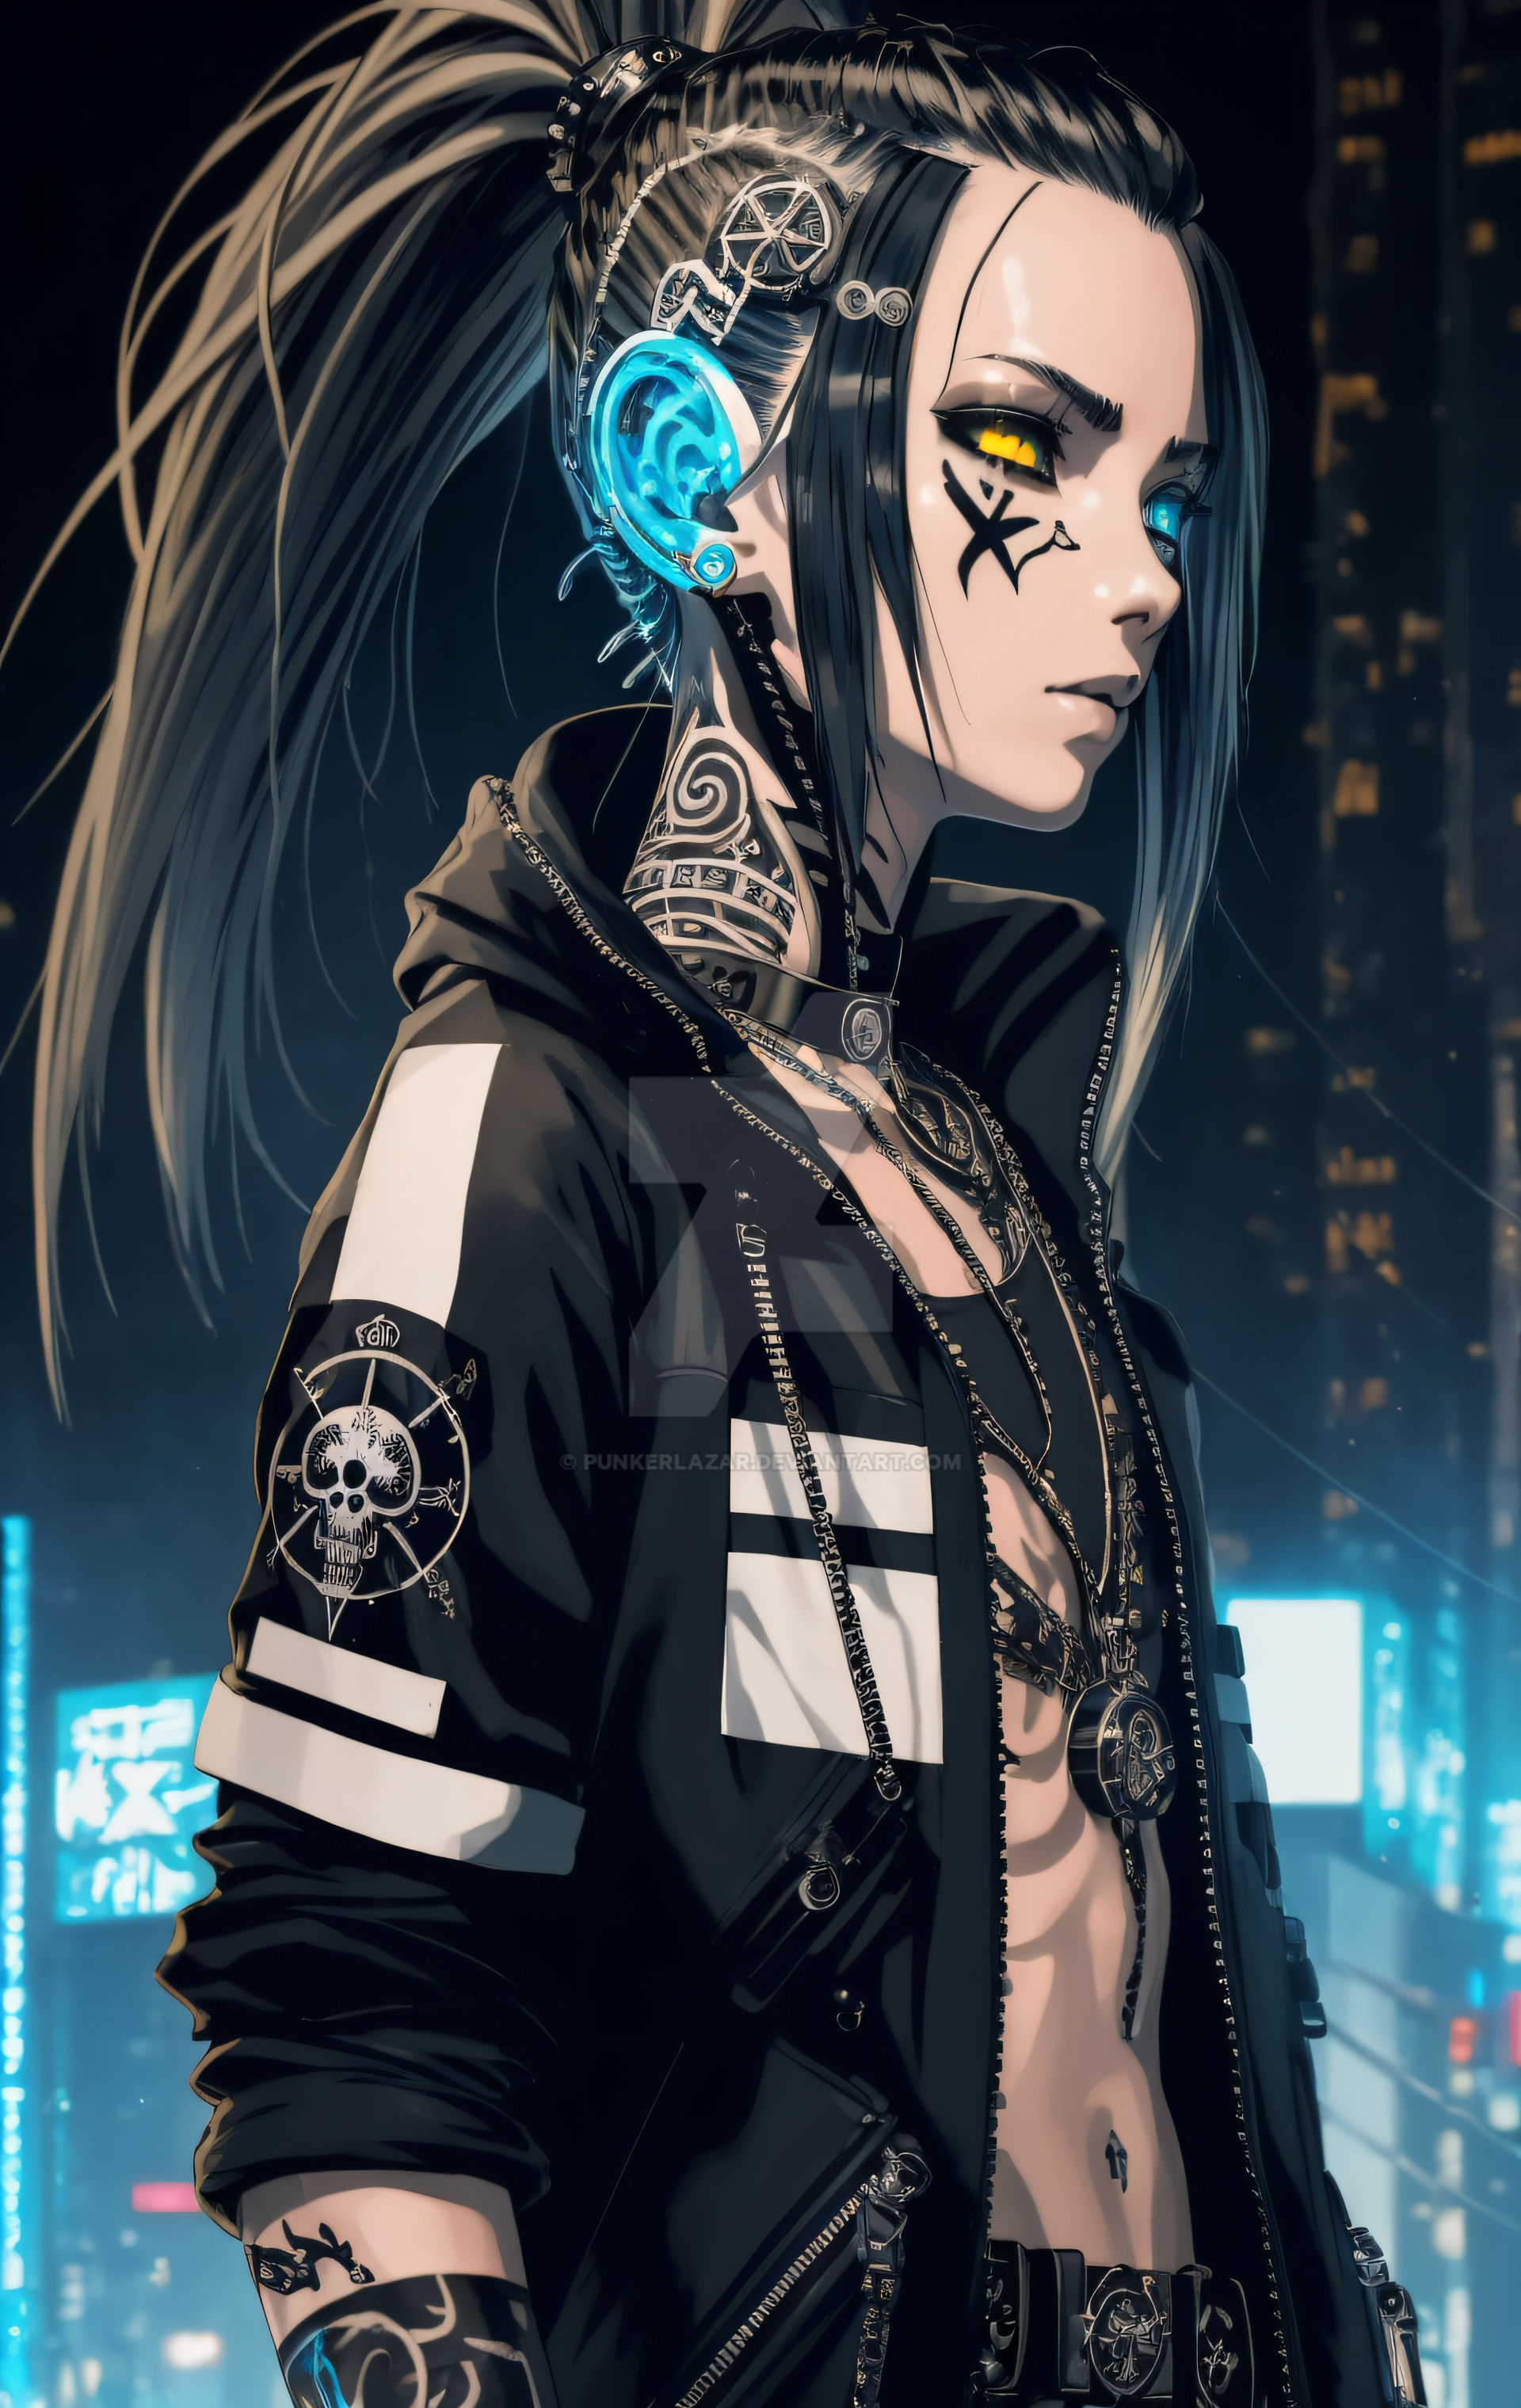 Anime-Cyberpunk-Girl-iPhone-Wallpaper-HD by 9U6ININ on DeviantArt